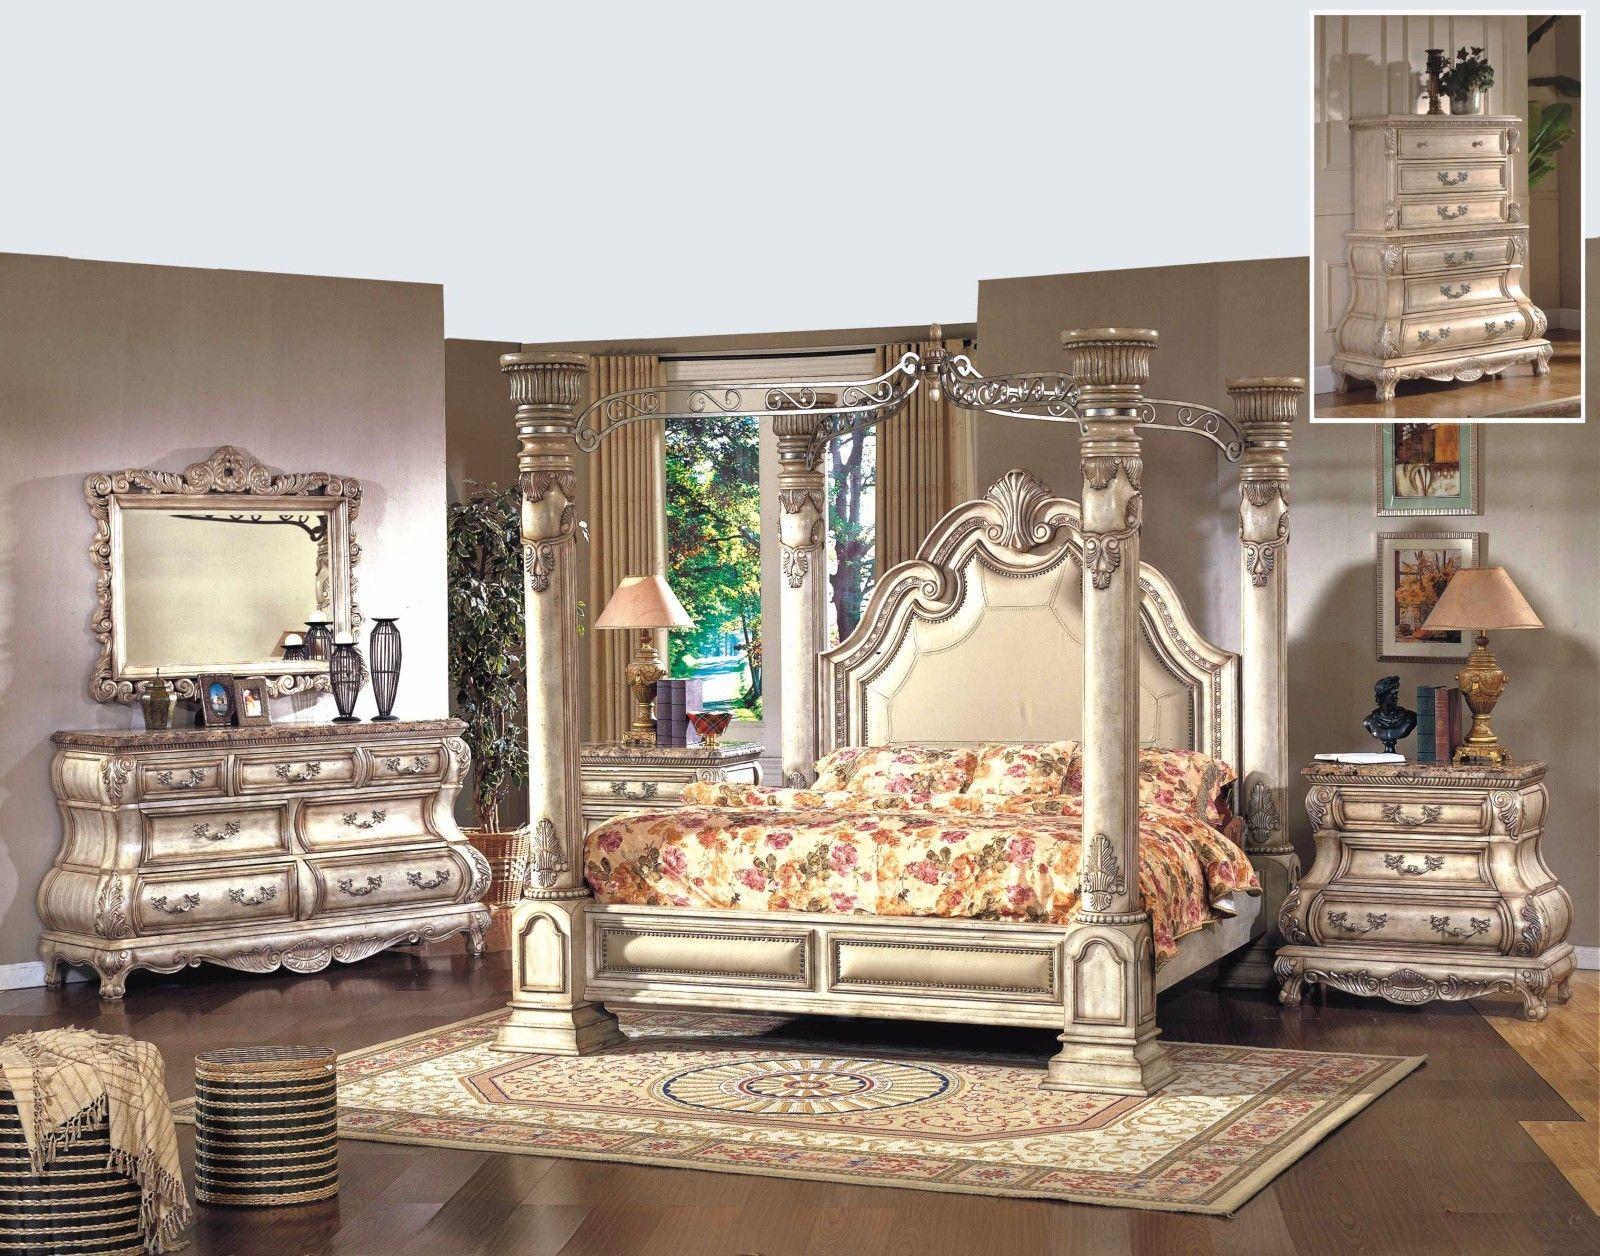 

    
Mcferran B9097 Monaco Blanc Luxury Queen Size Canopy Bedroom Set 5 Pcs Classic
